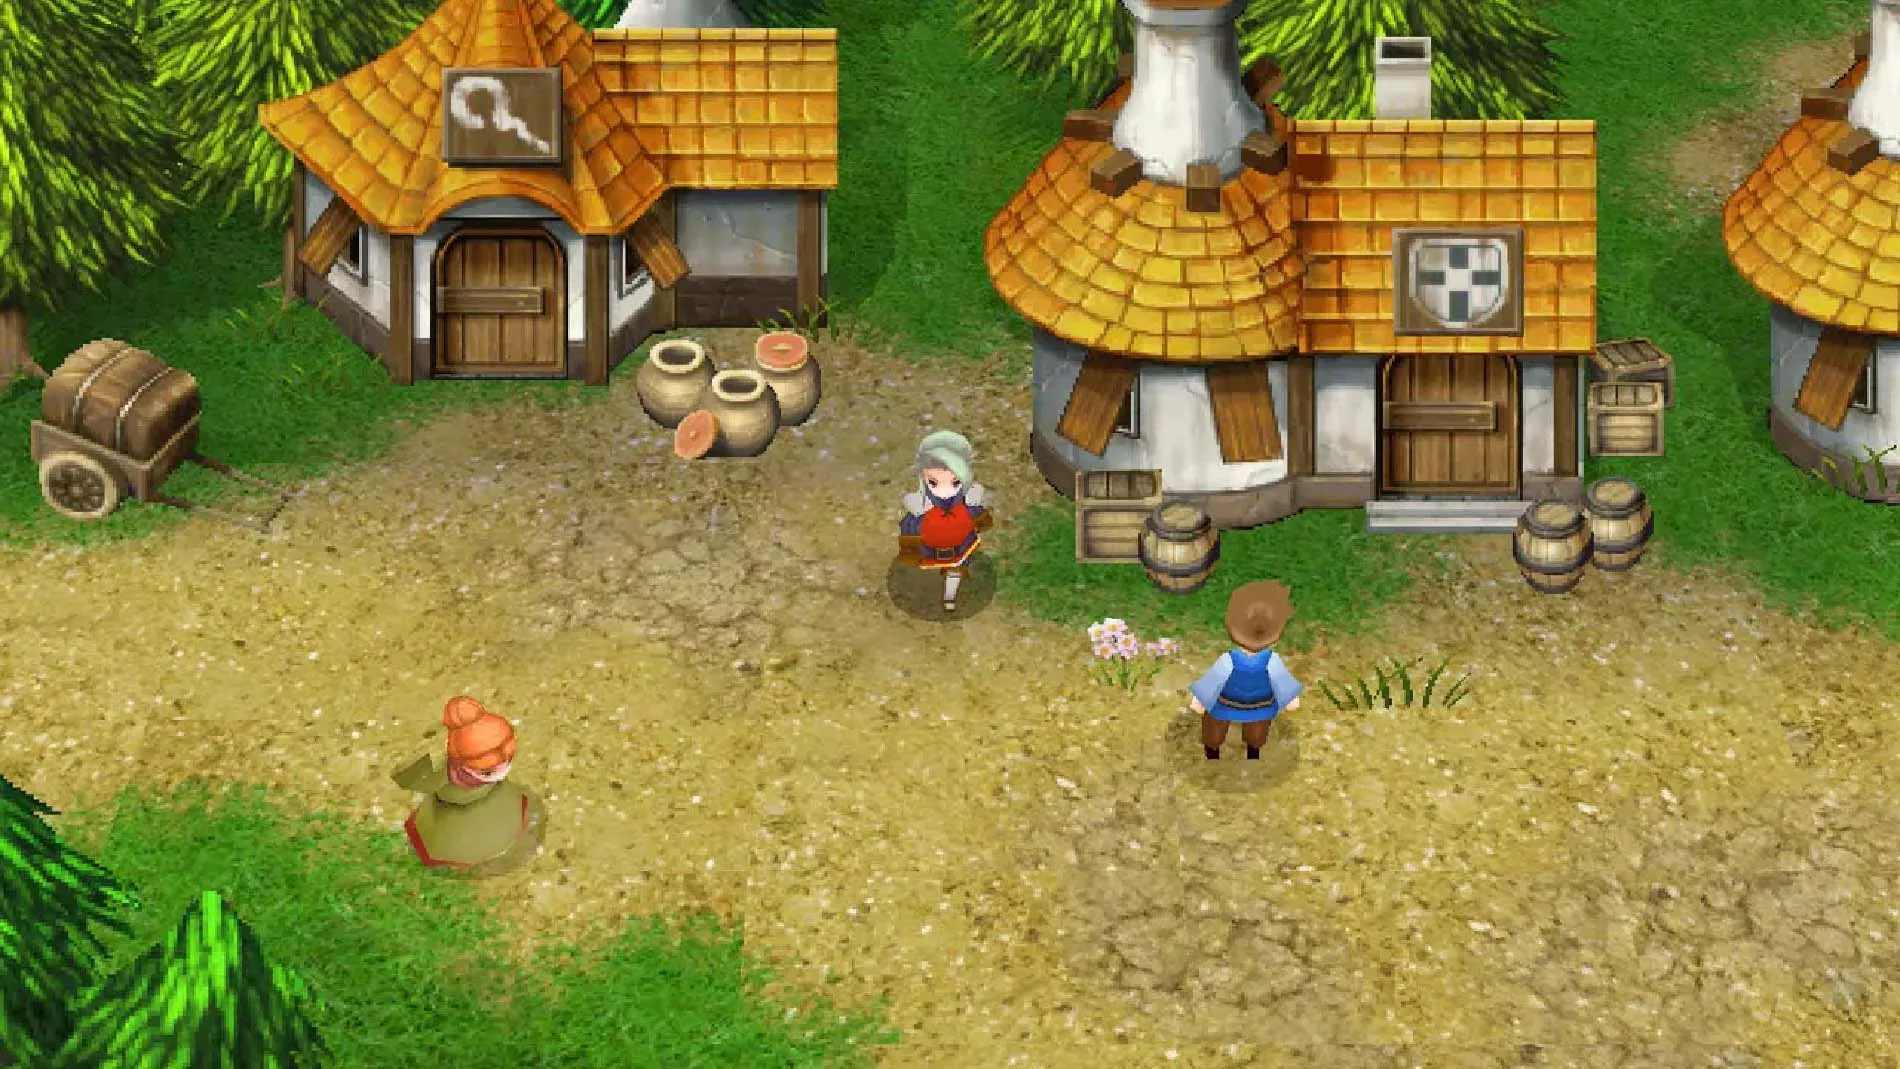 Screenshot of a 3D Final Fantasy character walking through a small town.